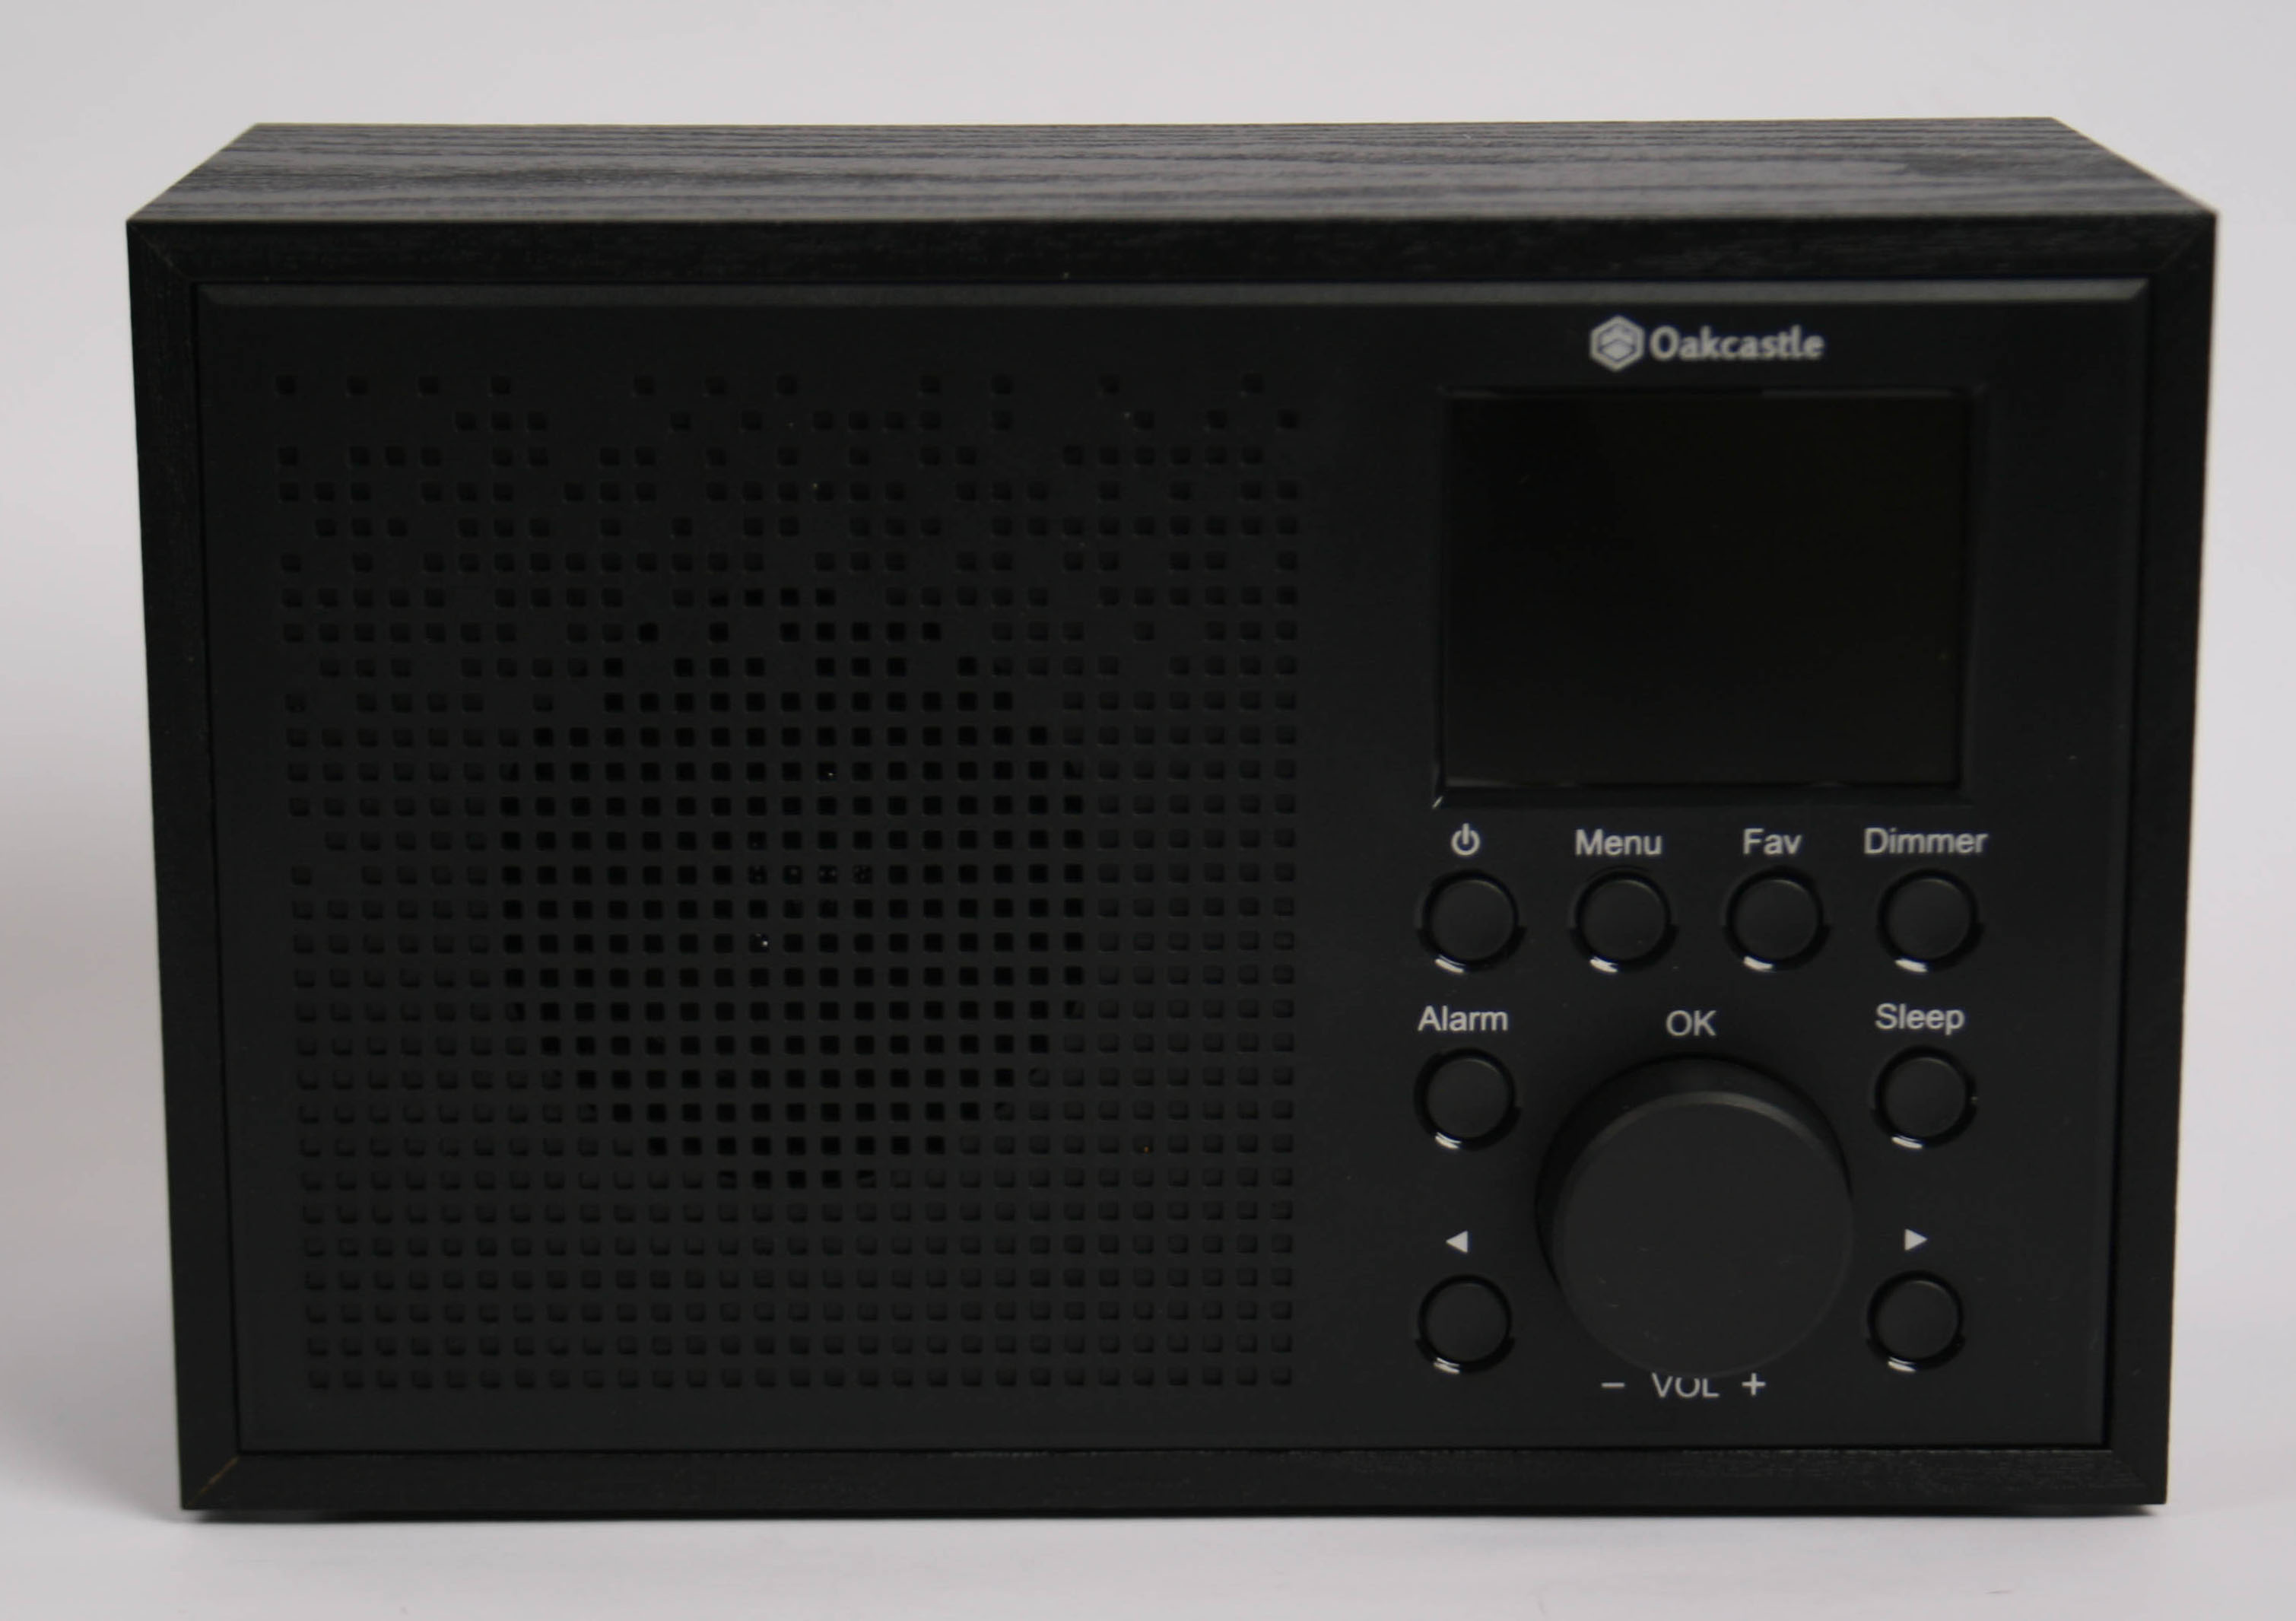 Oakcastle IR100 Internetradio mit Bluetooth WLAN Radio Spotify Connect